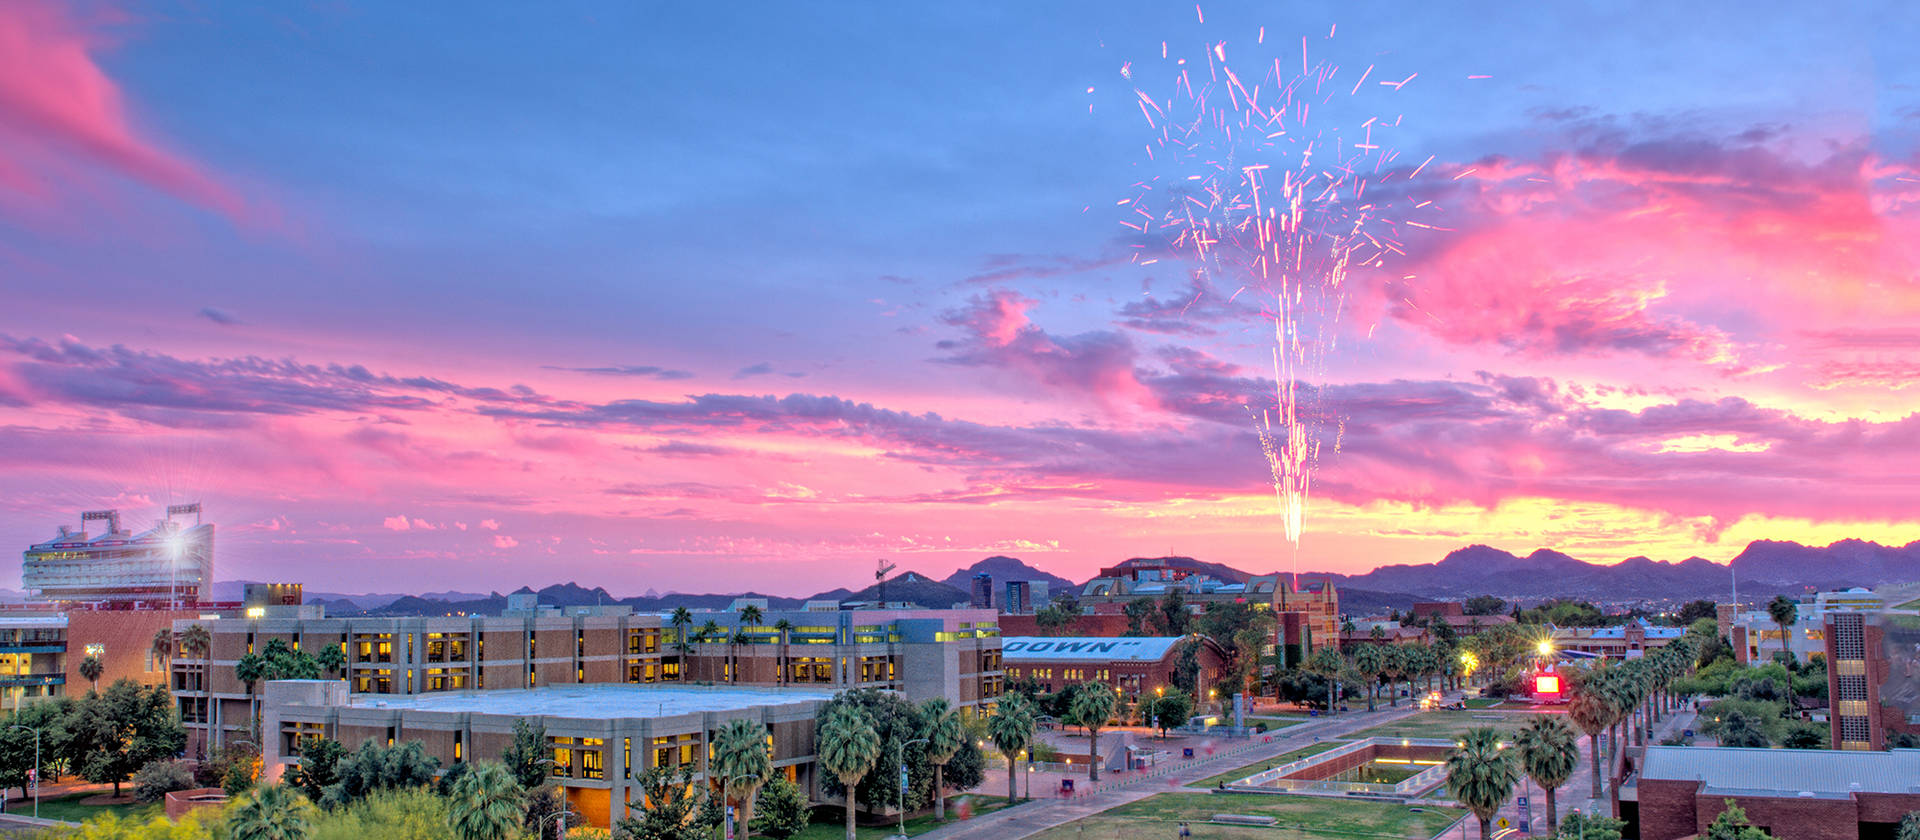 Sunset University Of Arizona Wallpaper